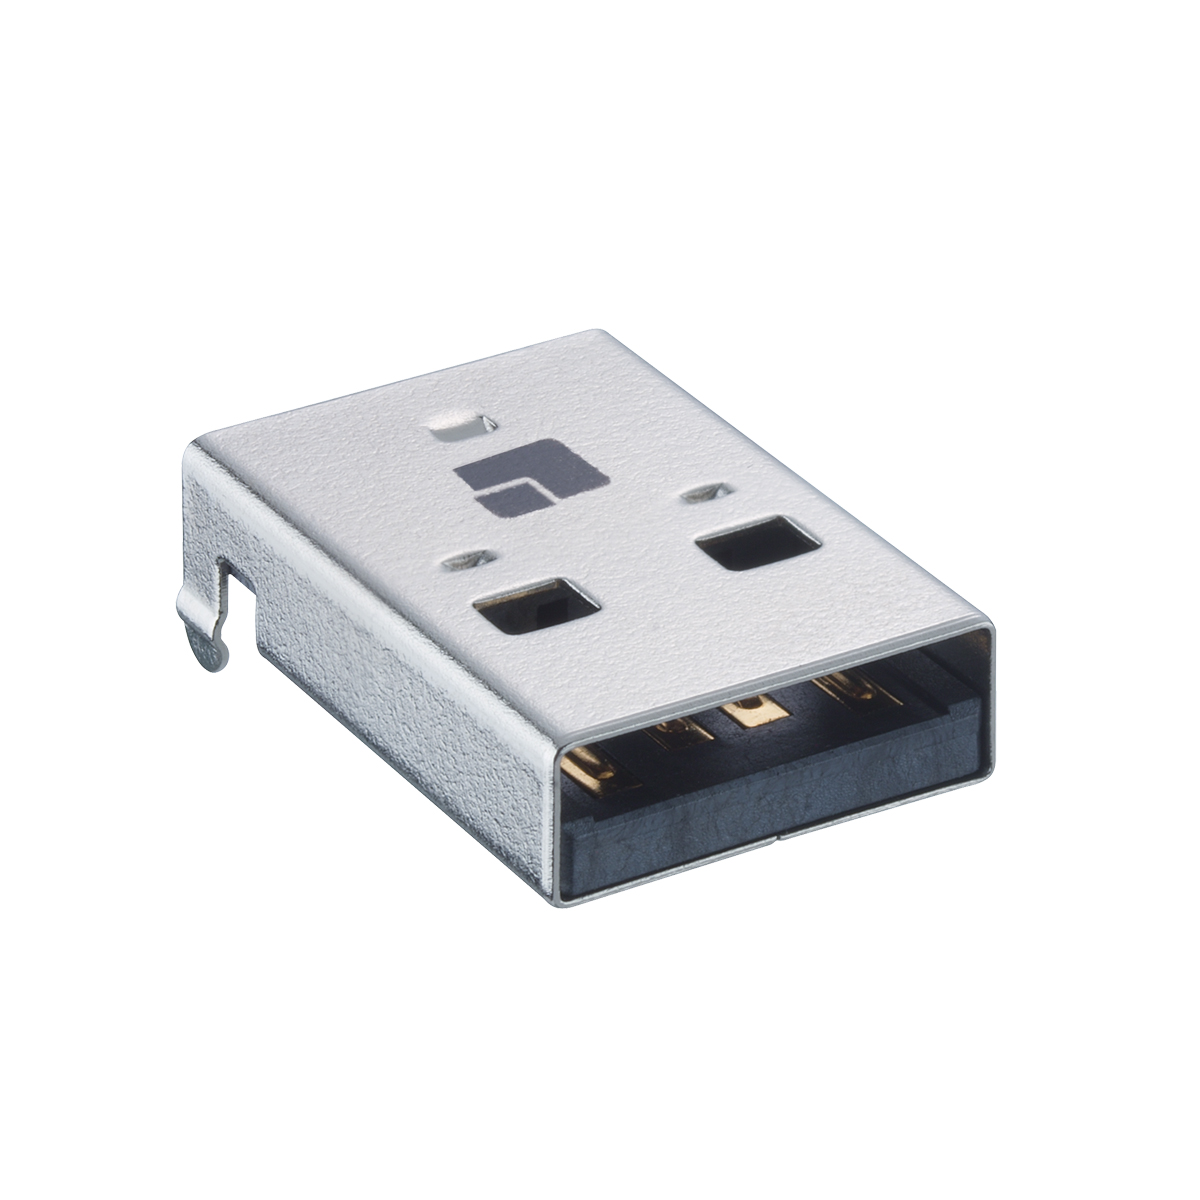 Lumberg: 2410 07 (Series 24 | USB and IEEE 1394 connectors)